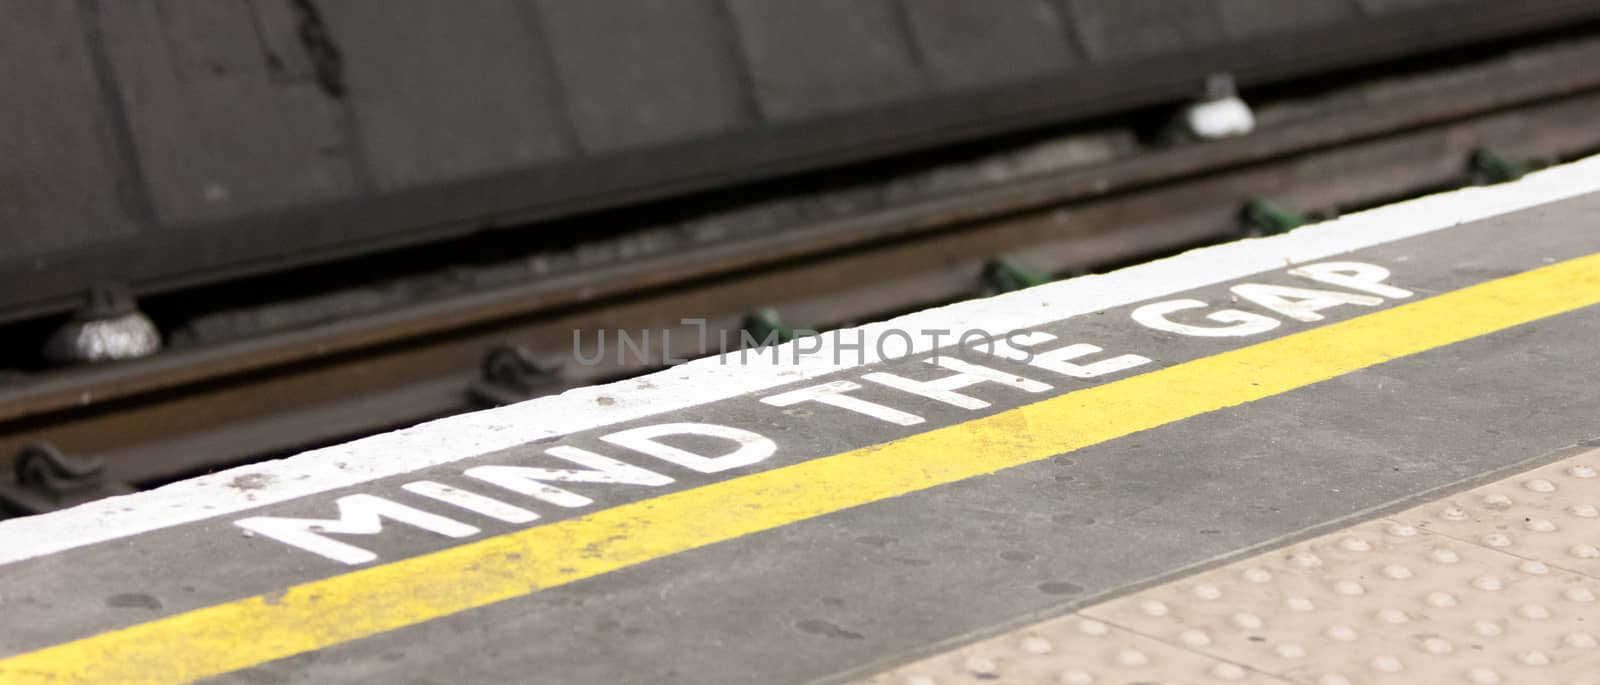 Mind the gap, warning in the London underground by michaklootwijk